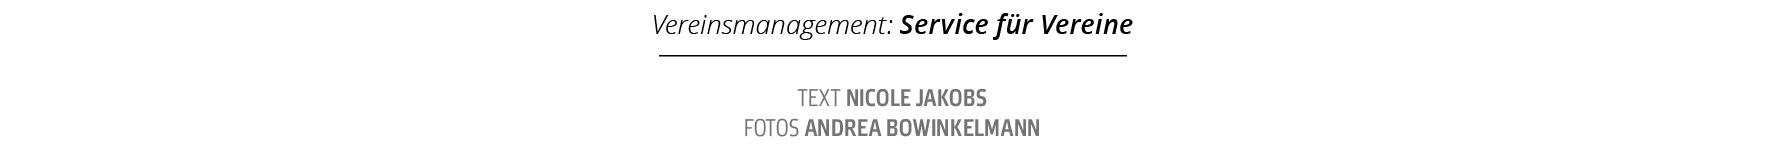 Vereinsmanagement: Service f r Vereine,Text nicole jakobs fotos Andrea Bowinkelman